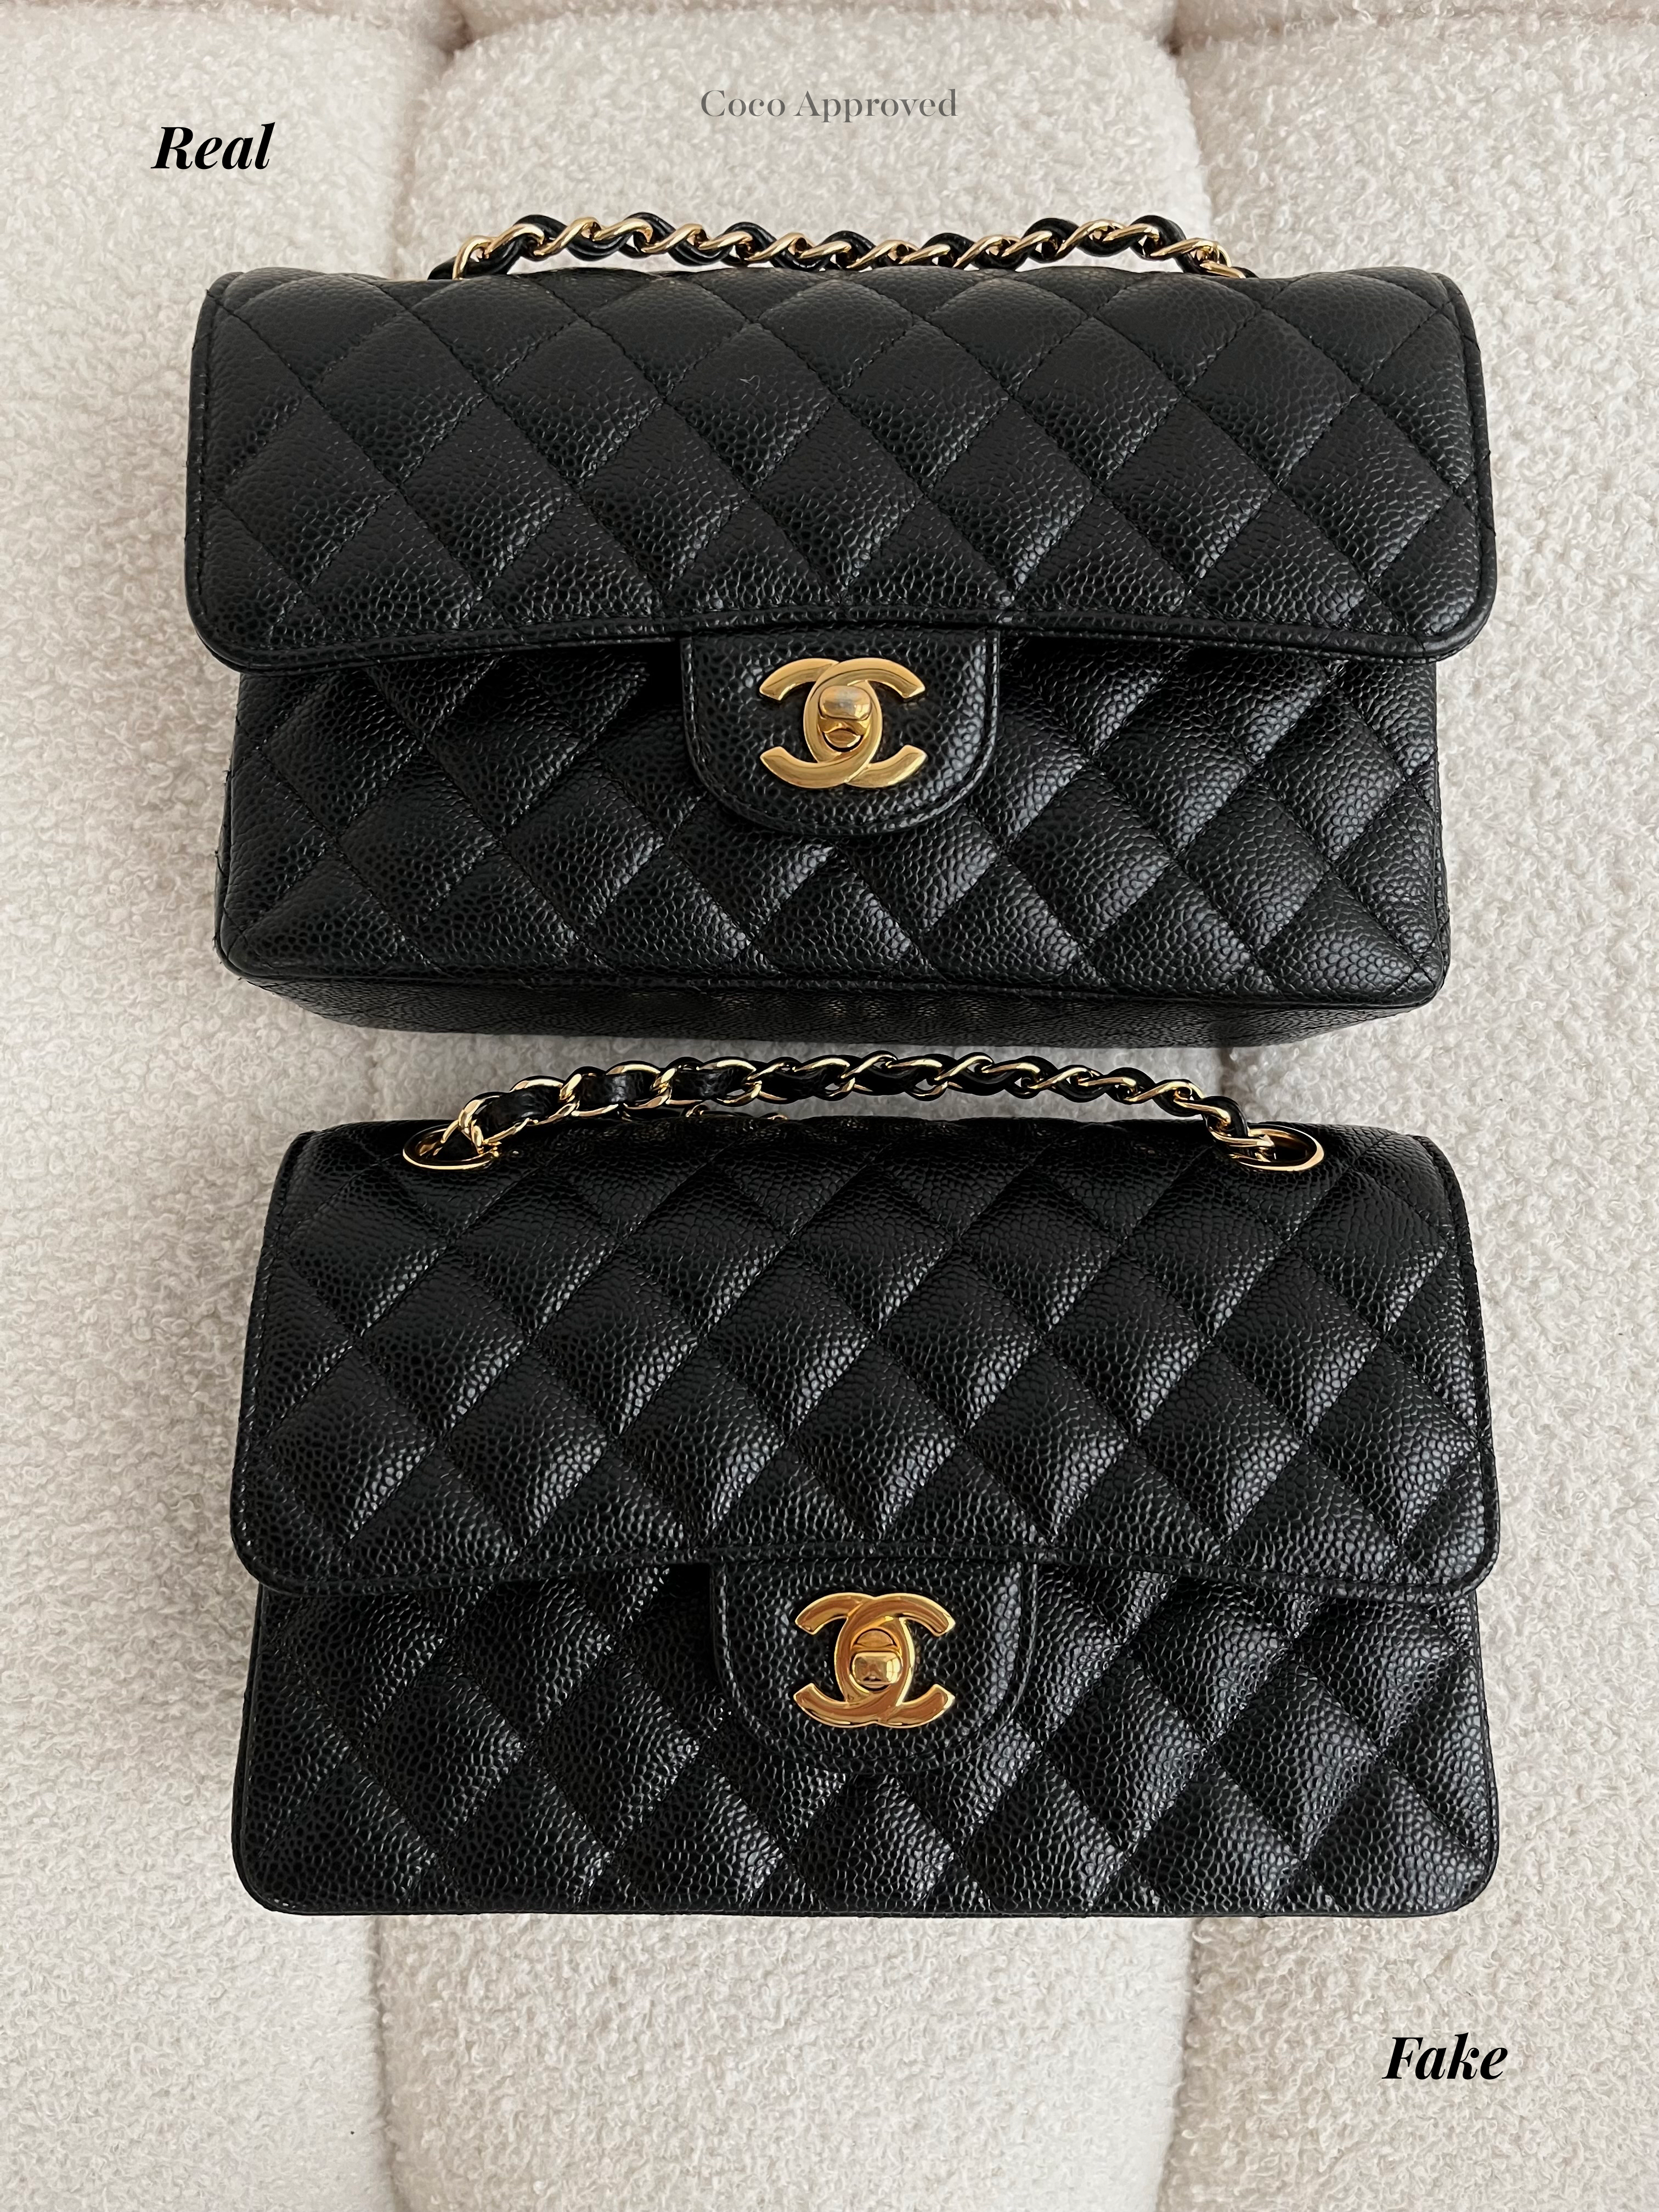 How to Spot a Fake Chanel Handbag